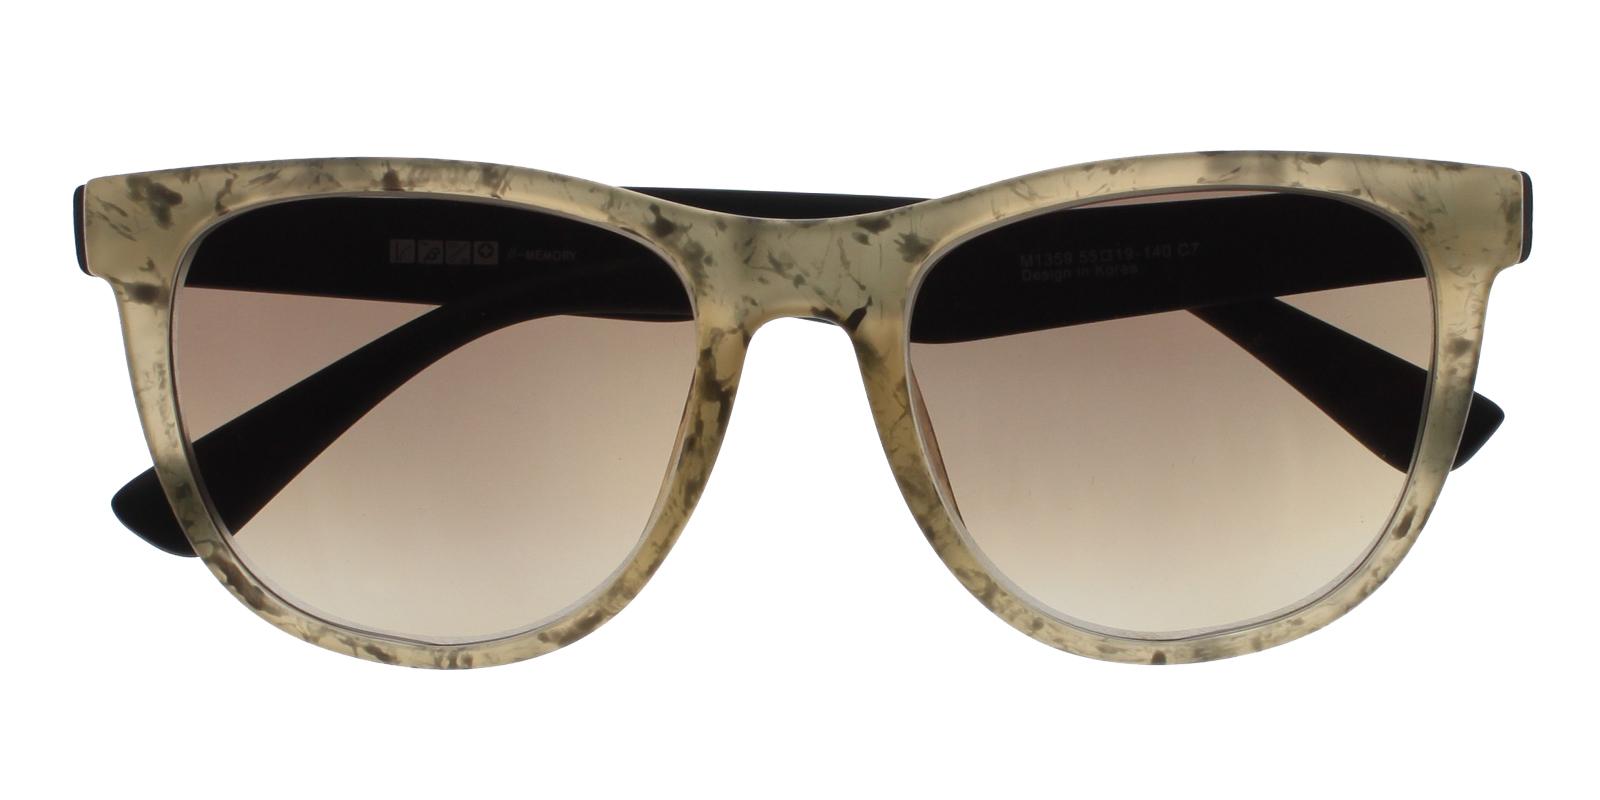 Hallstead Pattern TR Sunglasses , UniversalBridgeFit Frames from ABBE Glasses